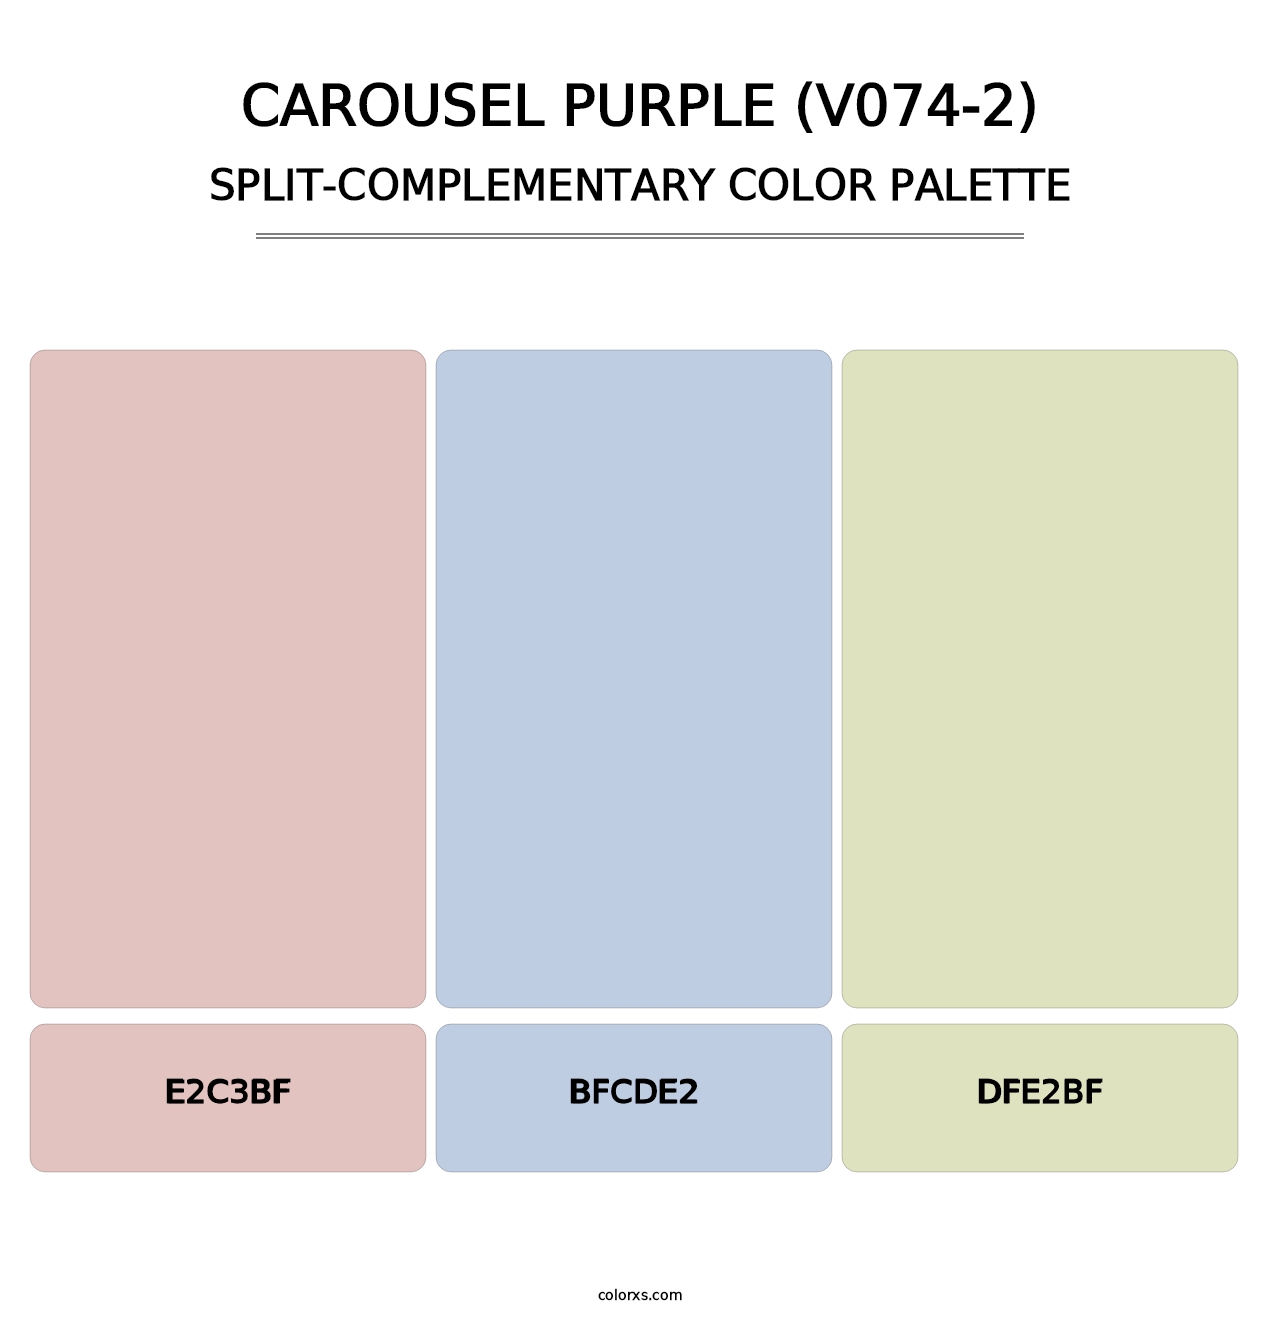 Carousel Purple (V074-2) - Split-Complementary Color Palette